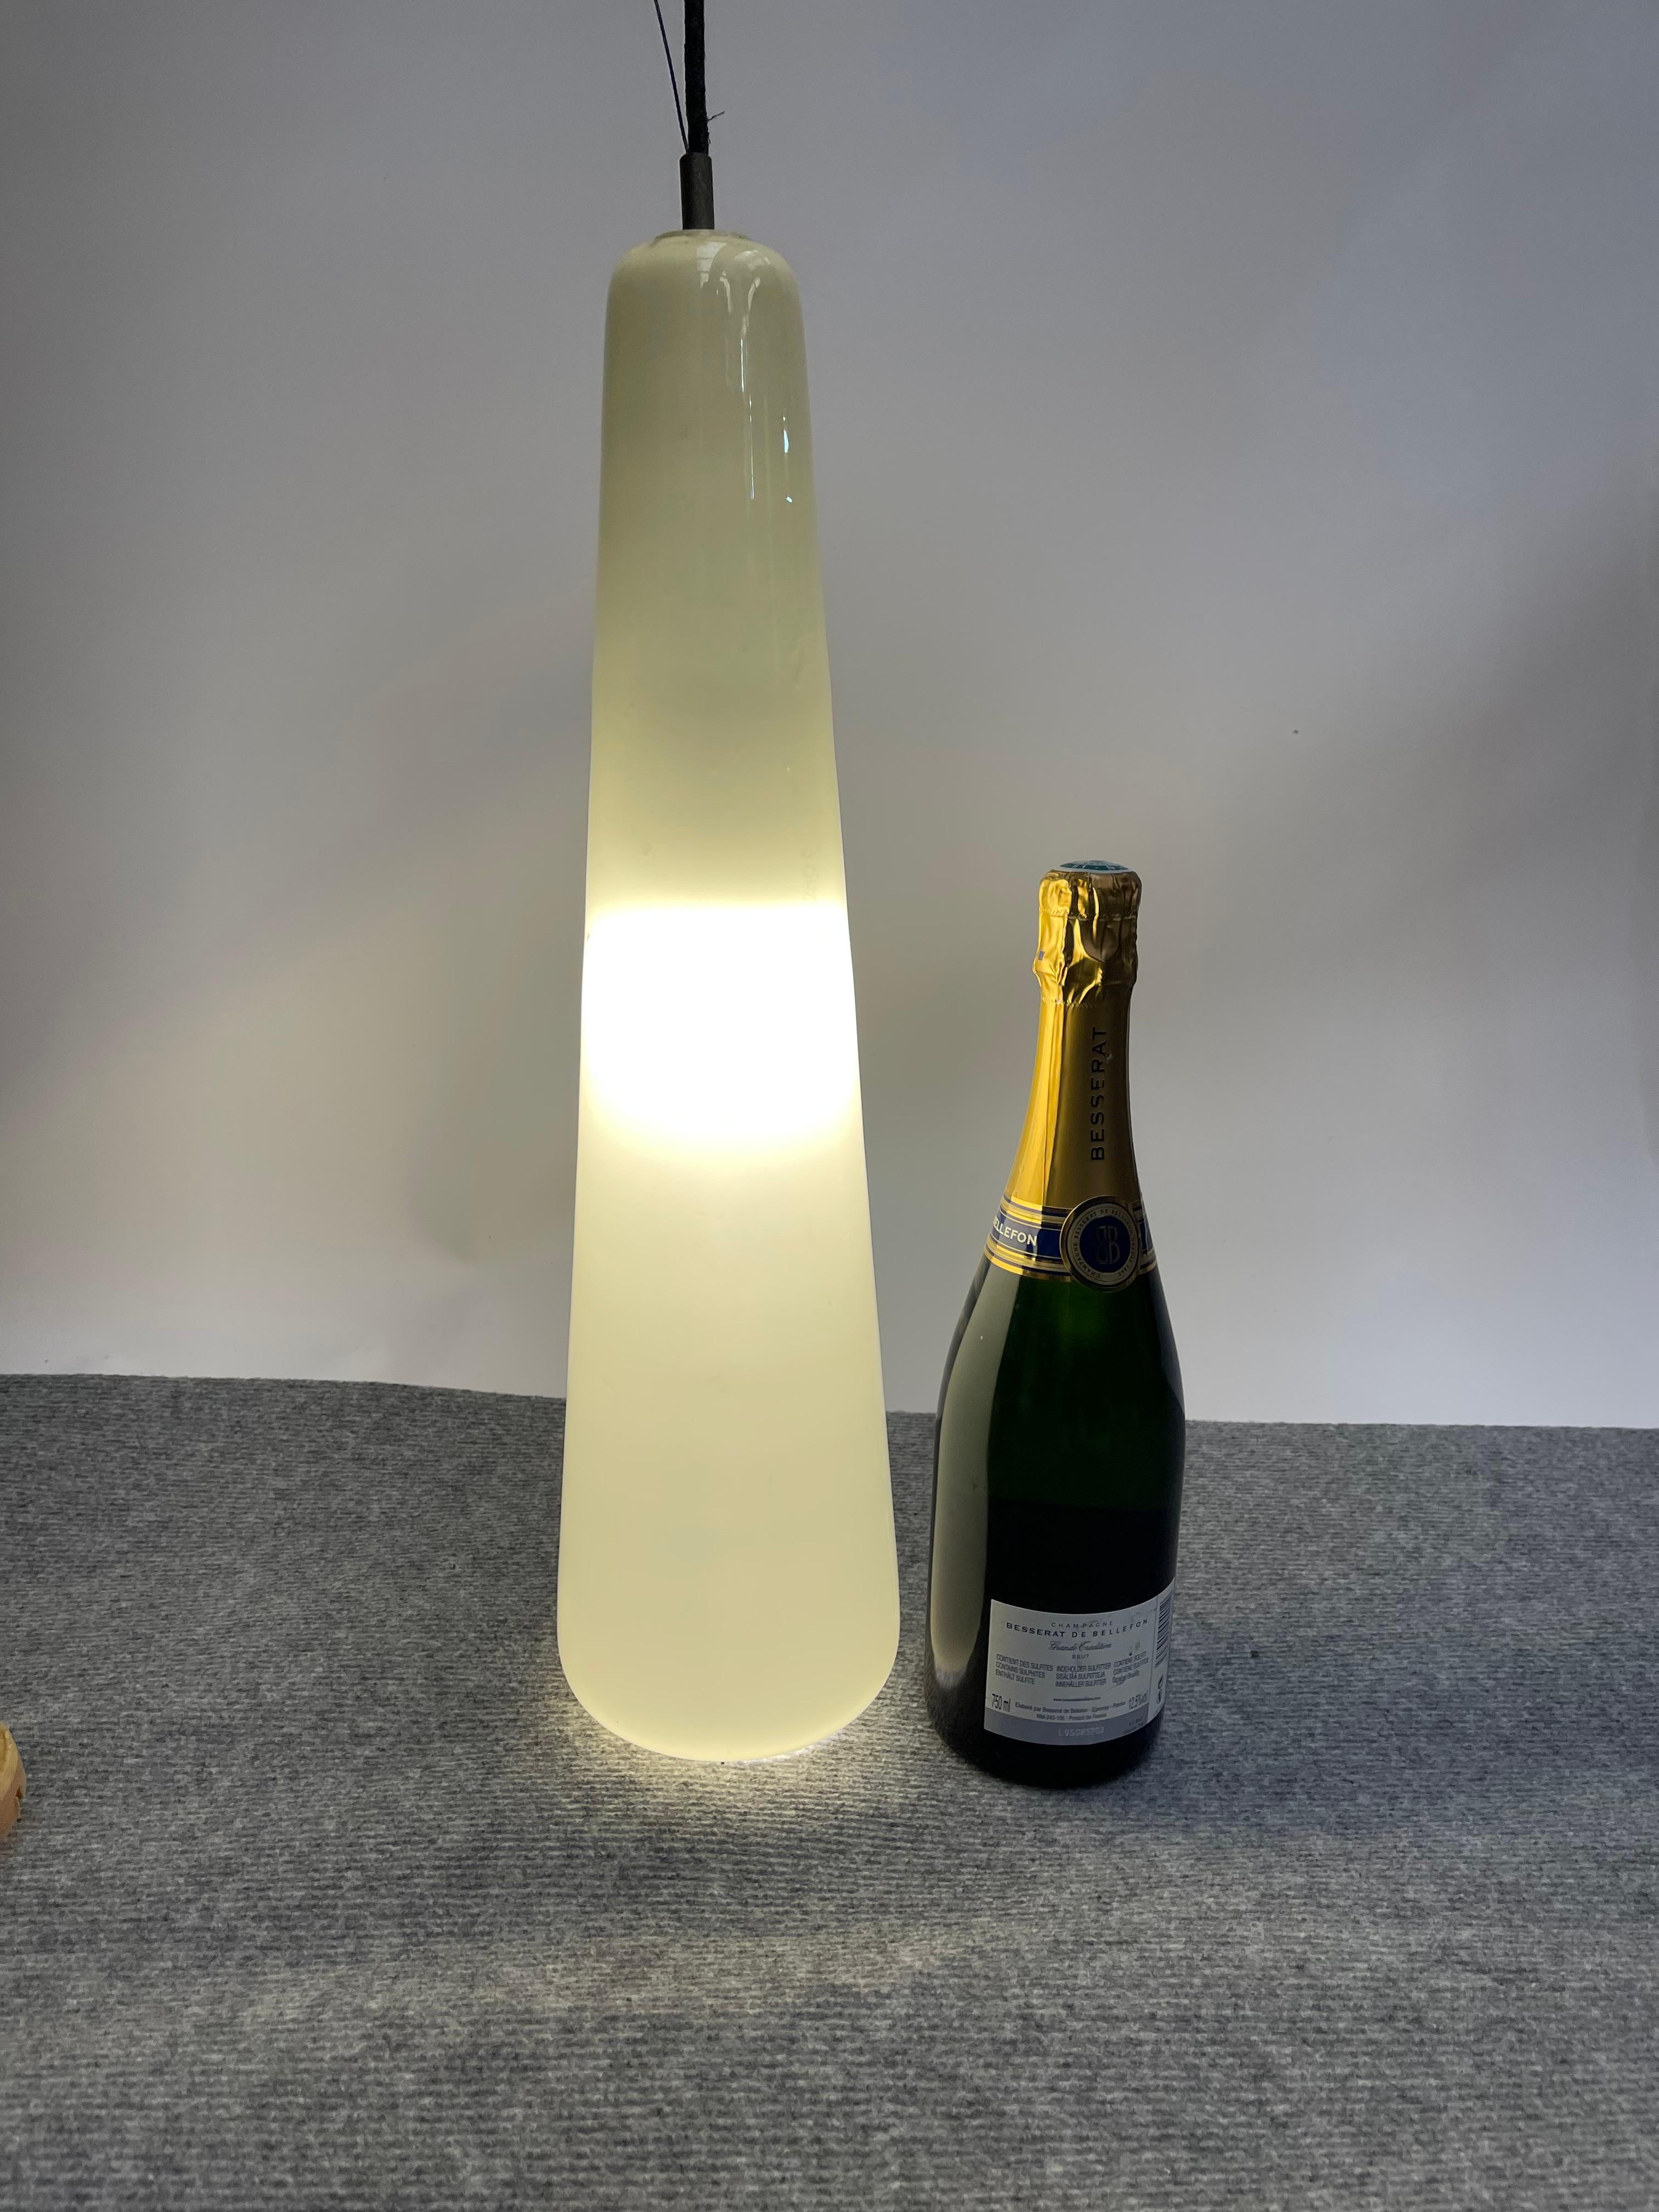 60s 70s Teak Ceiling Lamp Pendant Light Uno & Östen Kristiansson Luxus For Sale 3